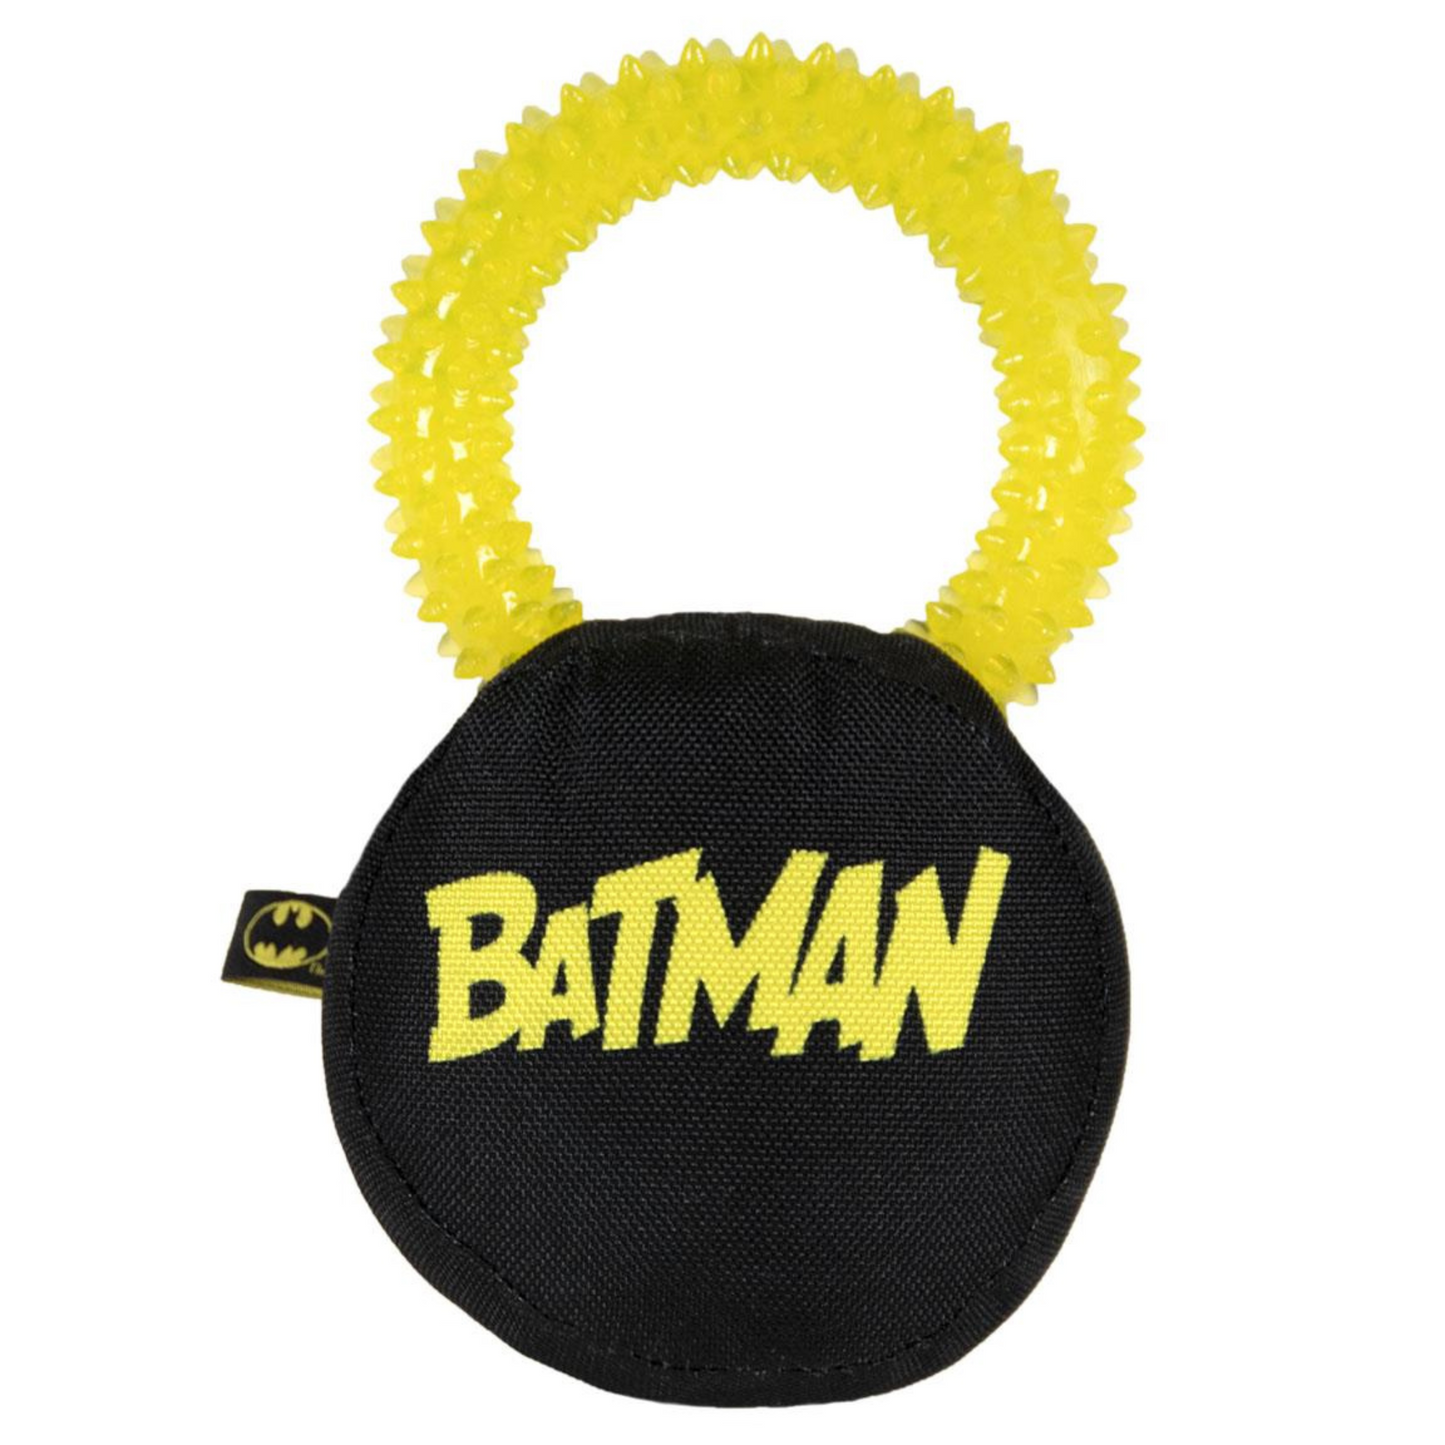 Batman Symbol Dog Toy